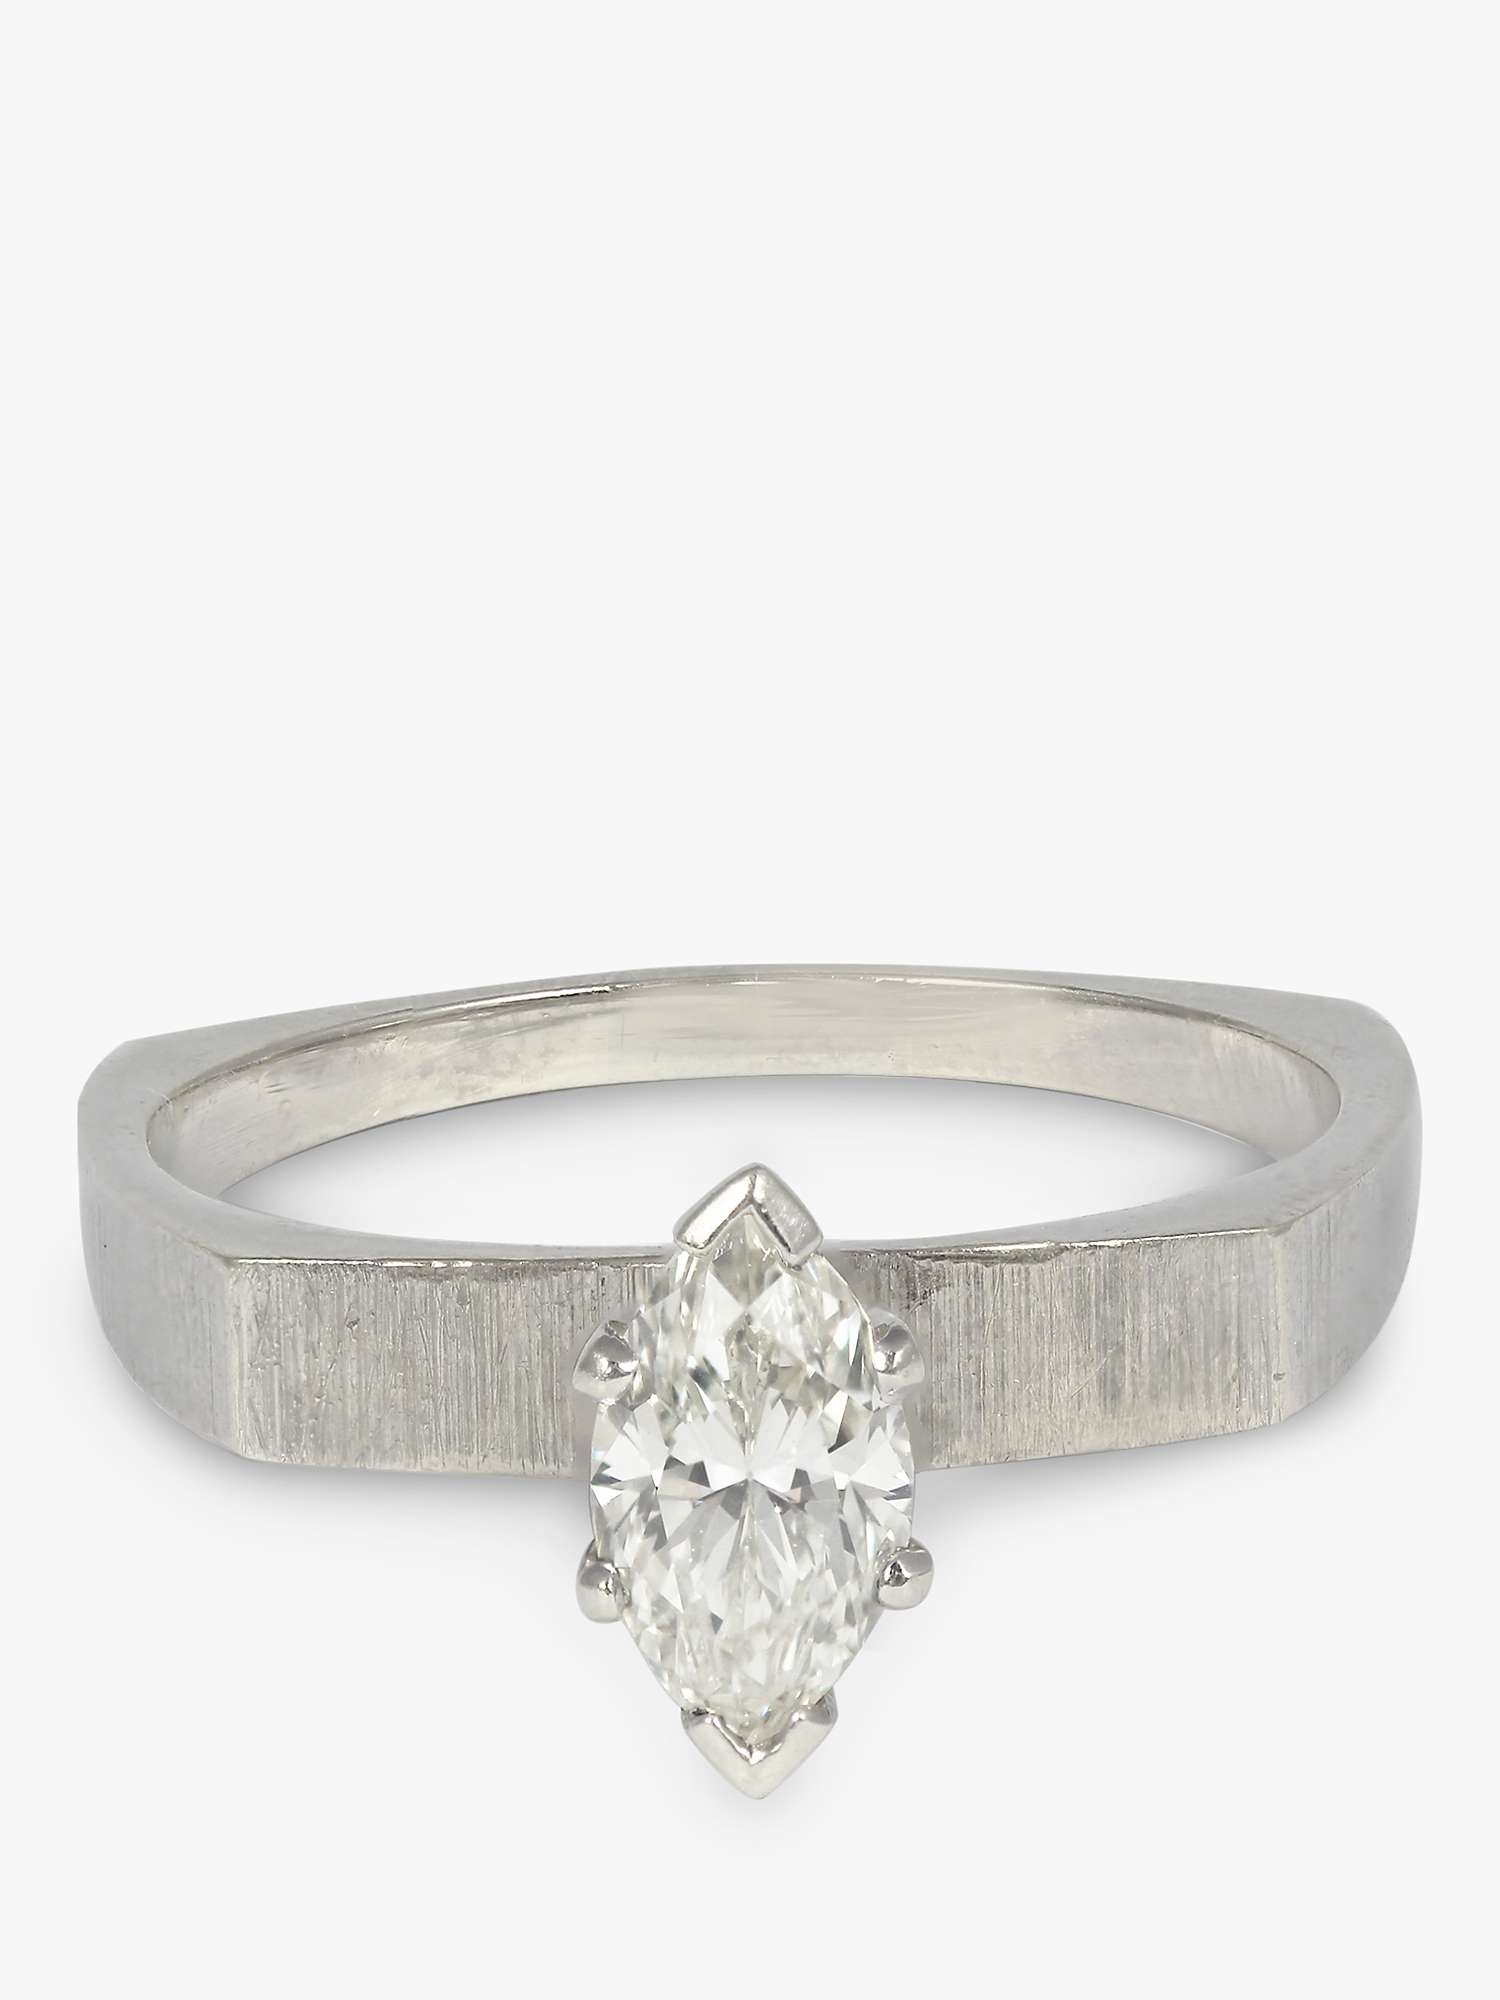 Buy Kojis 14ct White Gold Second Hand Diamond Ring Online at johnlewis.com